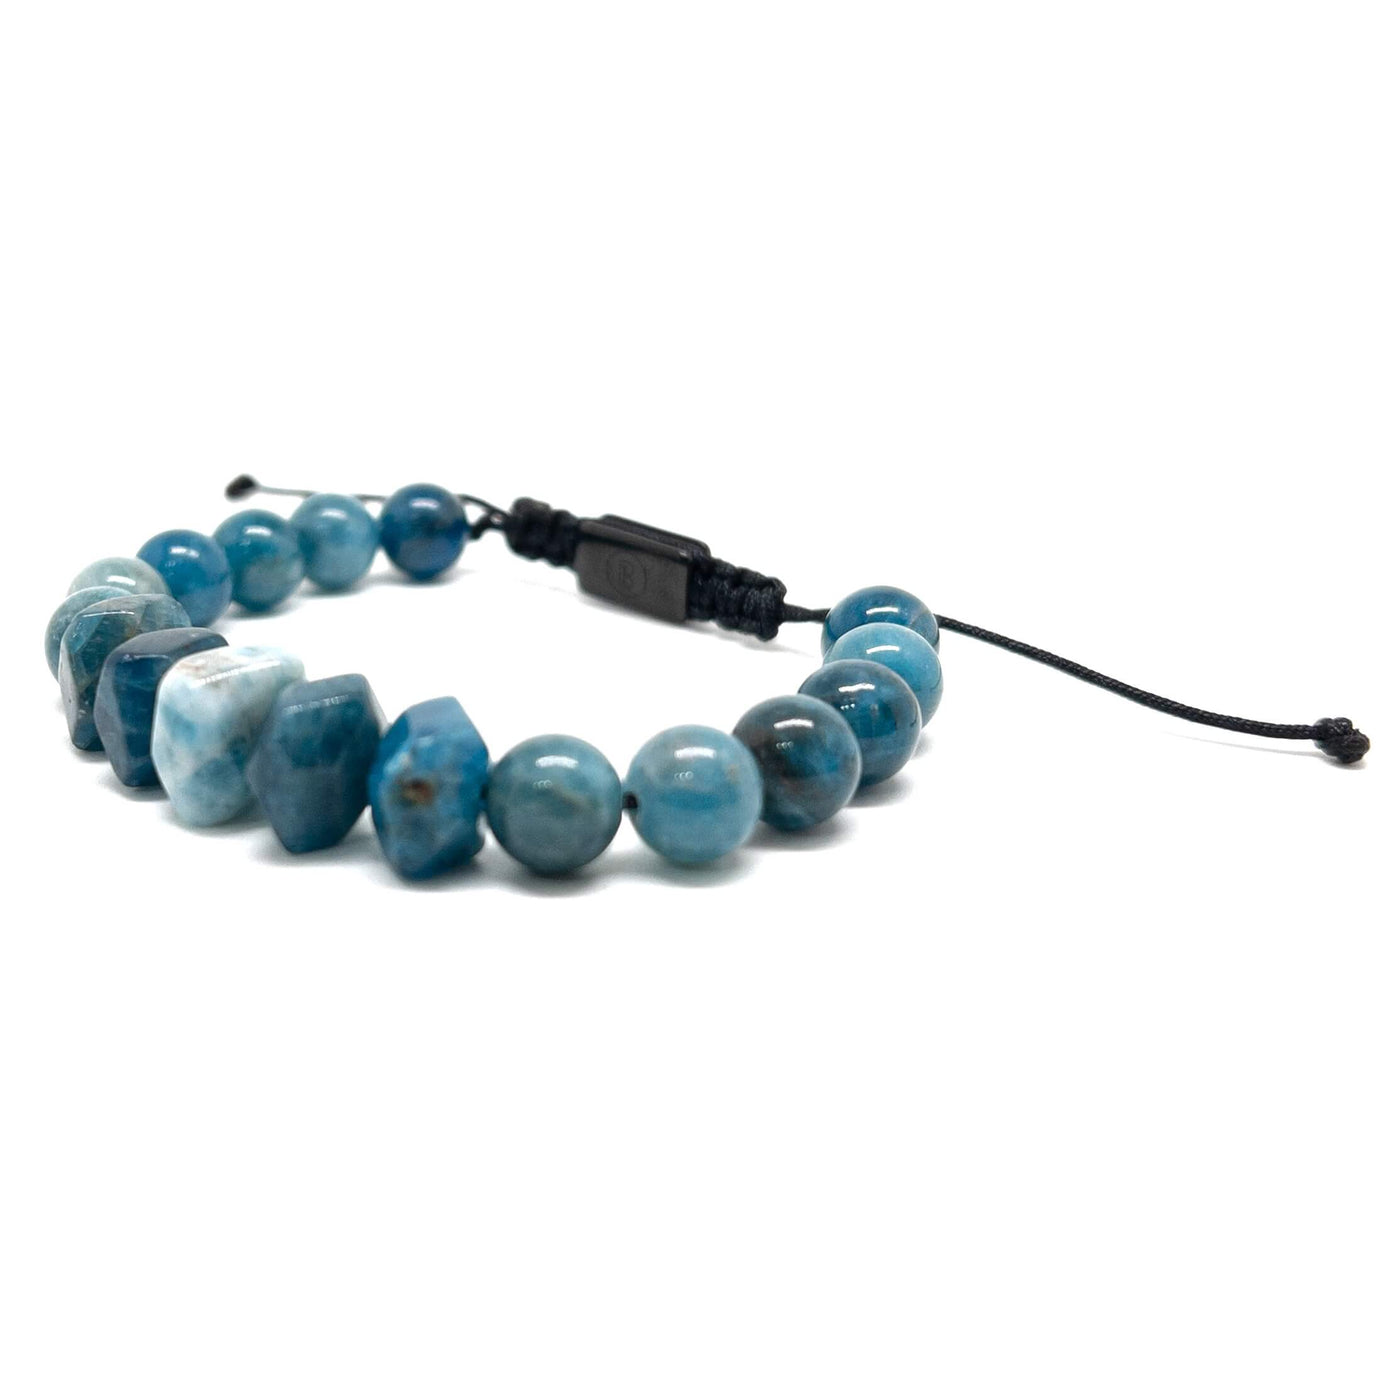 The Blue Apatite Thread Bracelet